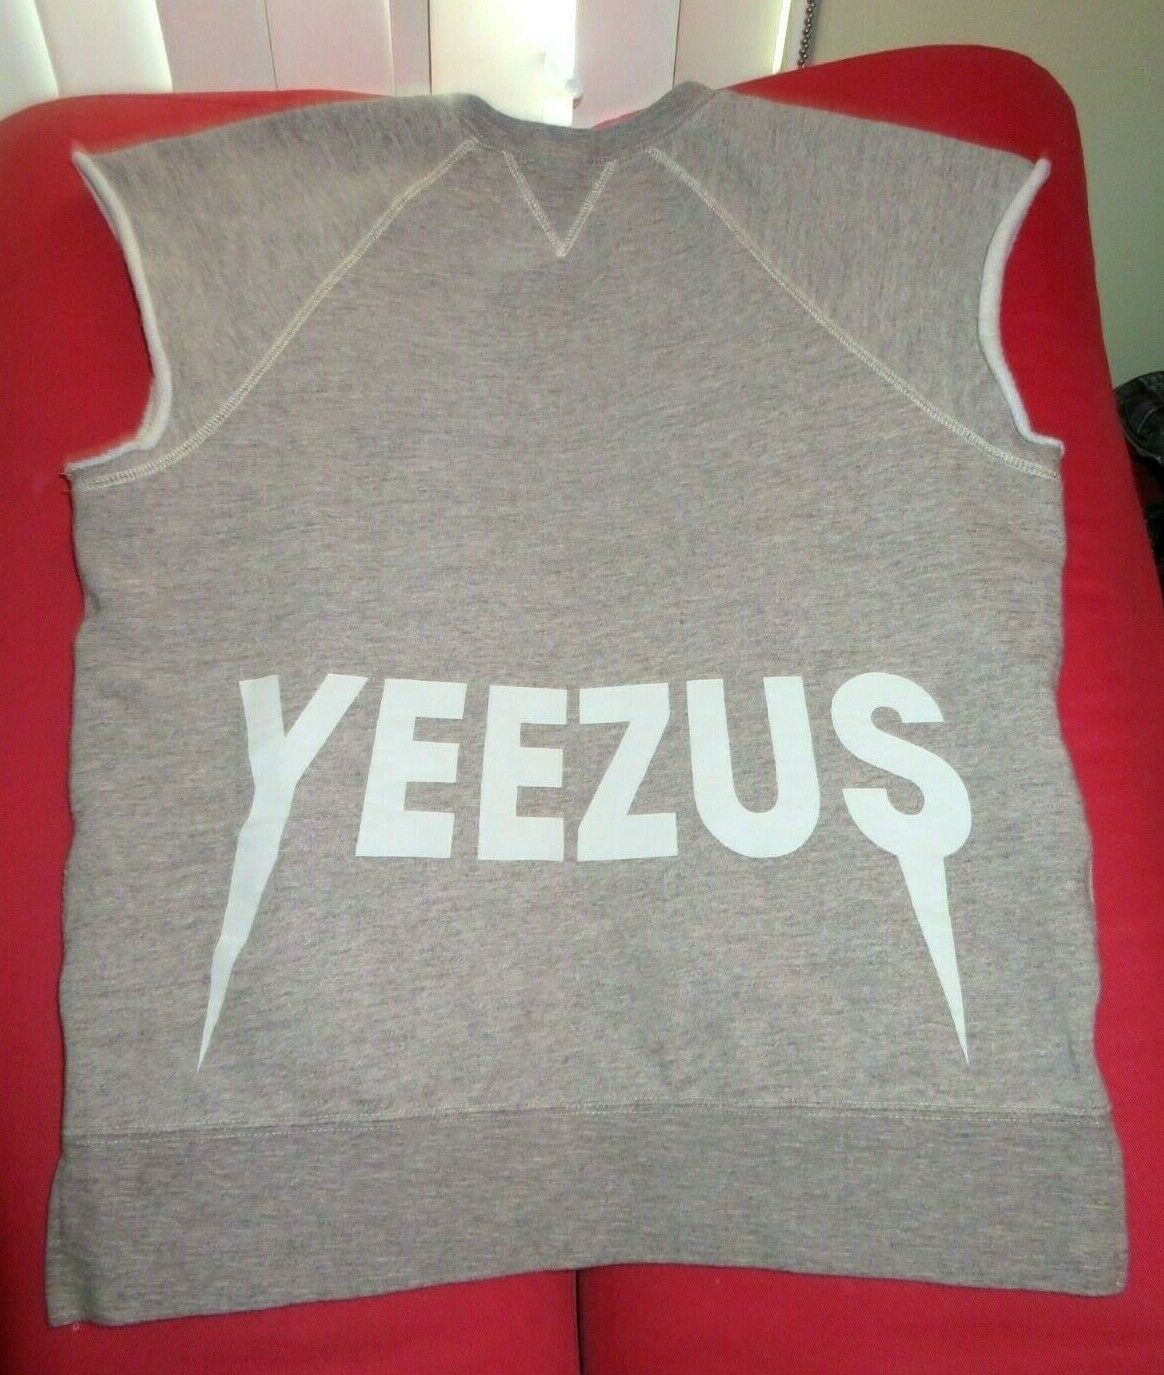 Rare Kanye West Yeezus Tour Men's Cut-off Sweatshirt Shirt-grey-small Fits M/l